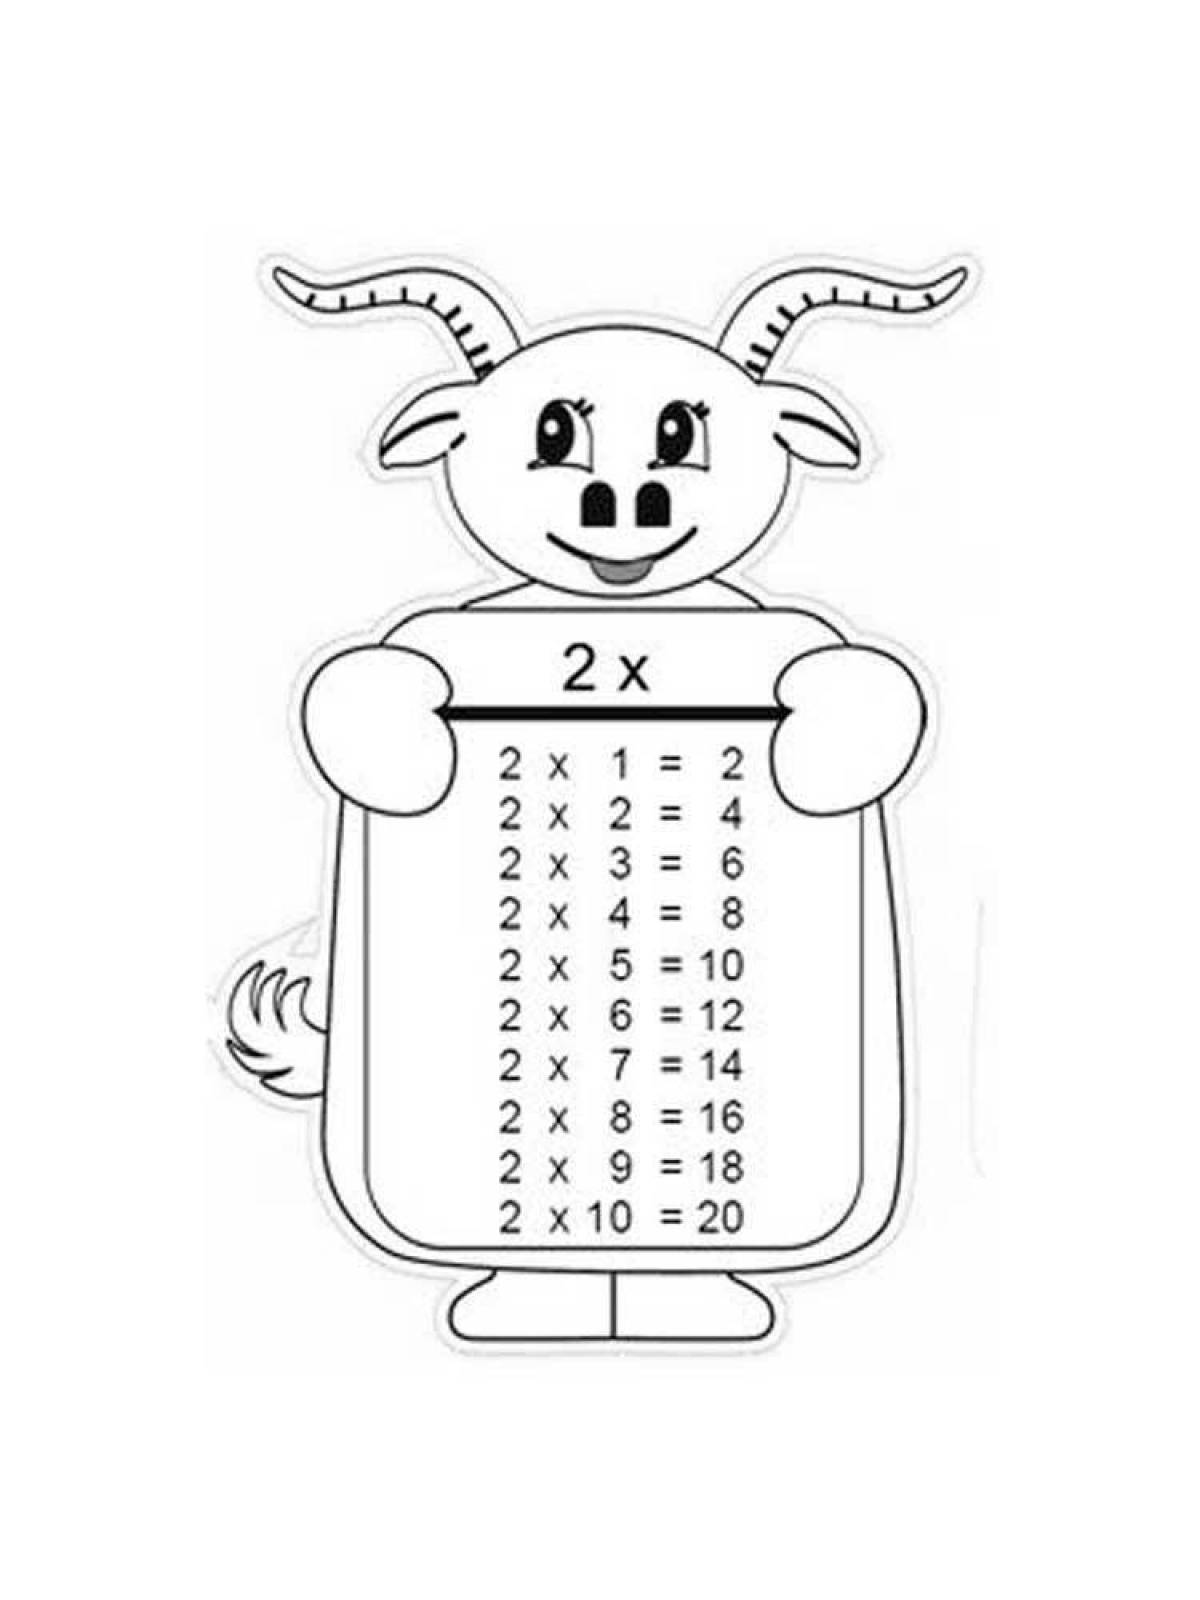 Fun 2 multiplication table